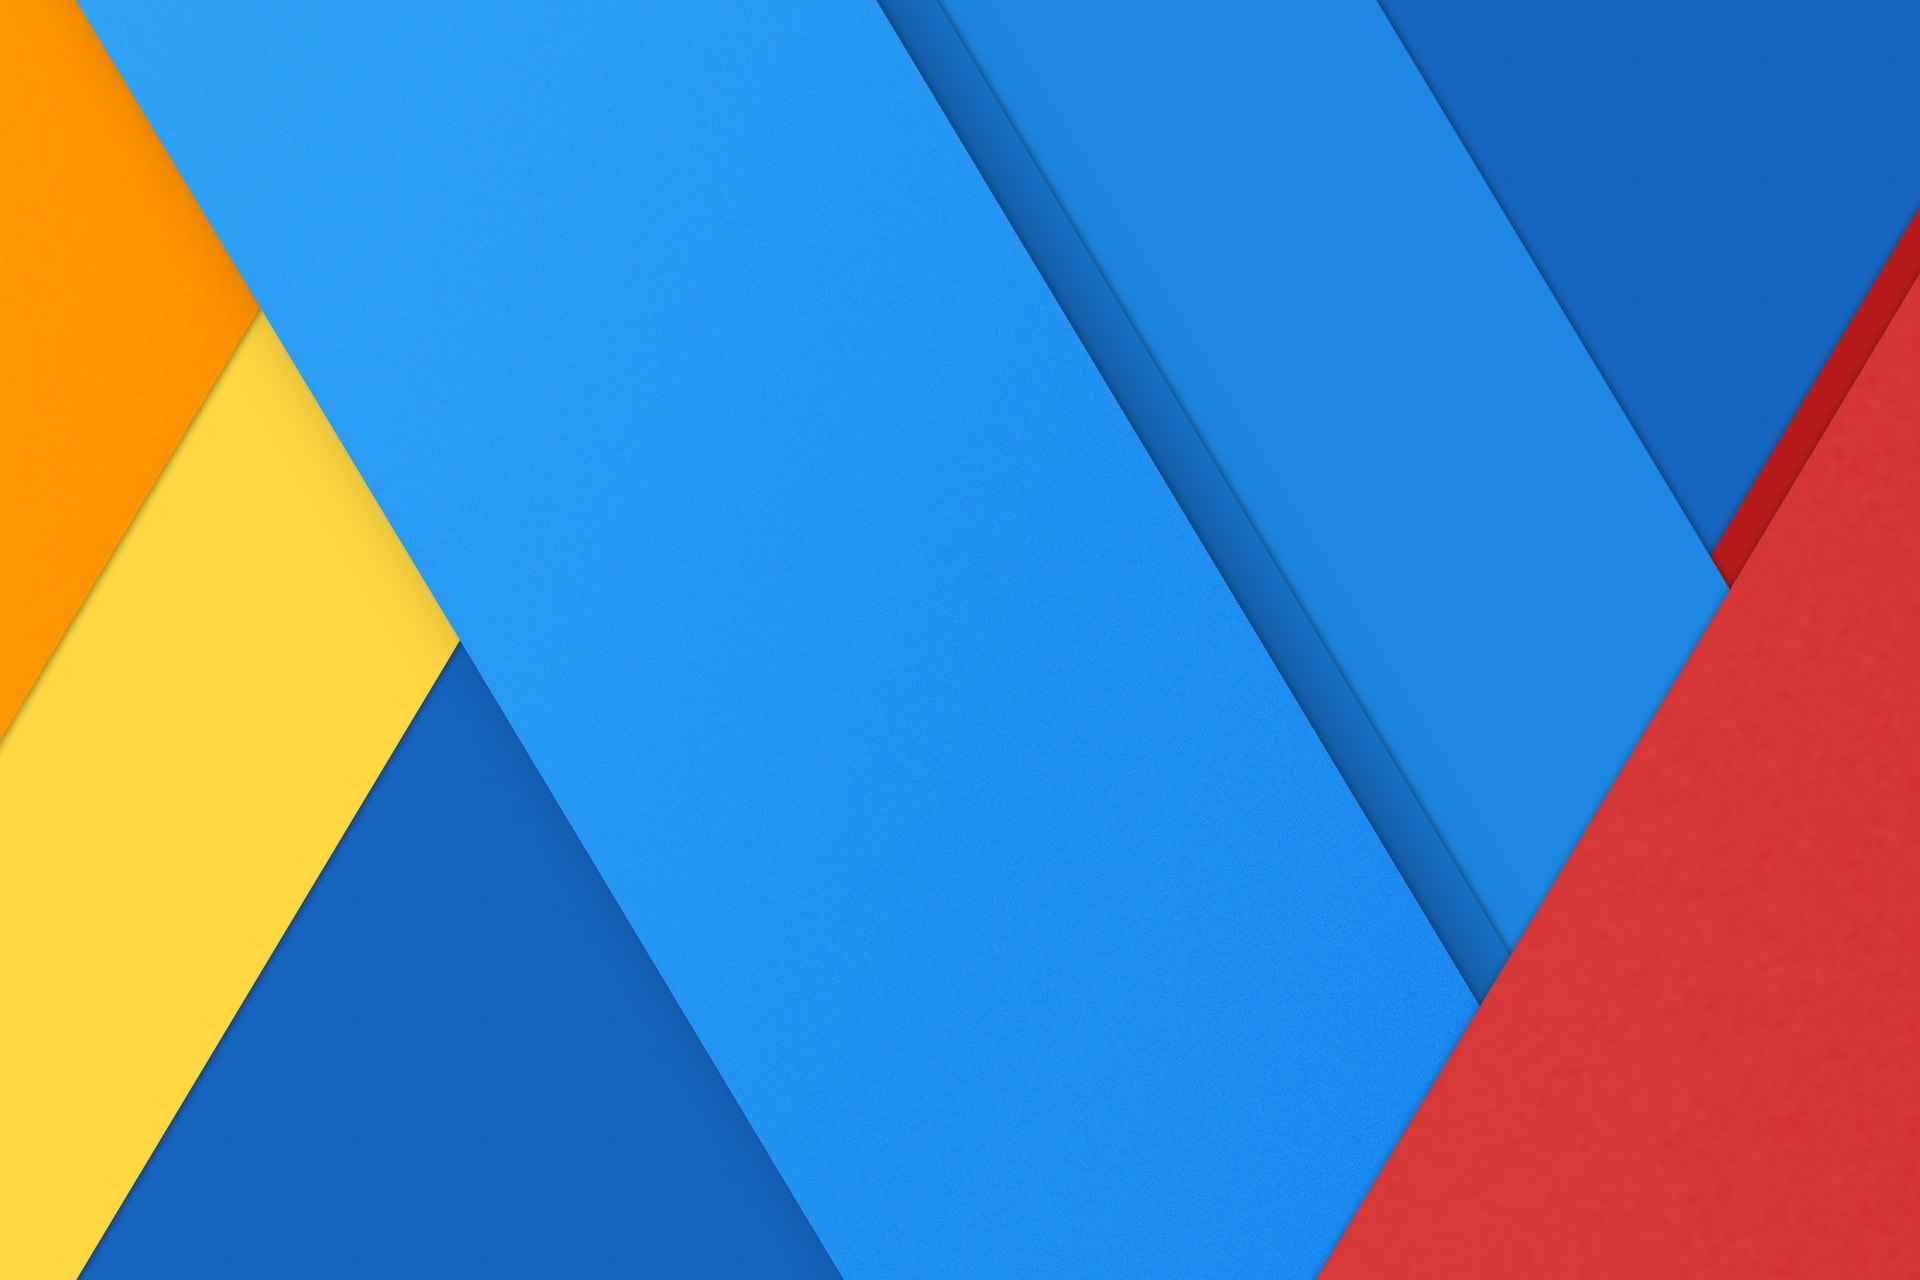 fond d'écran nexus 6p,bleu,bleu cobalt,rouge,bleu électrique,jaune